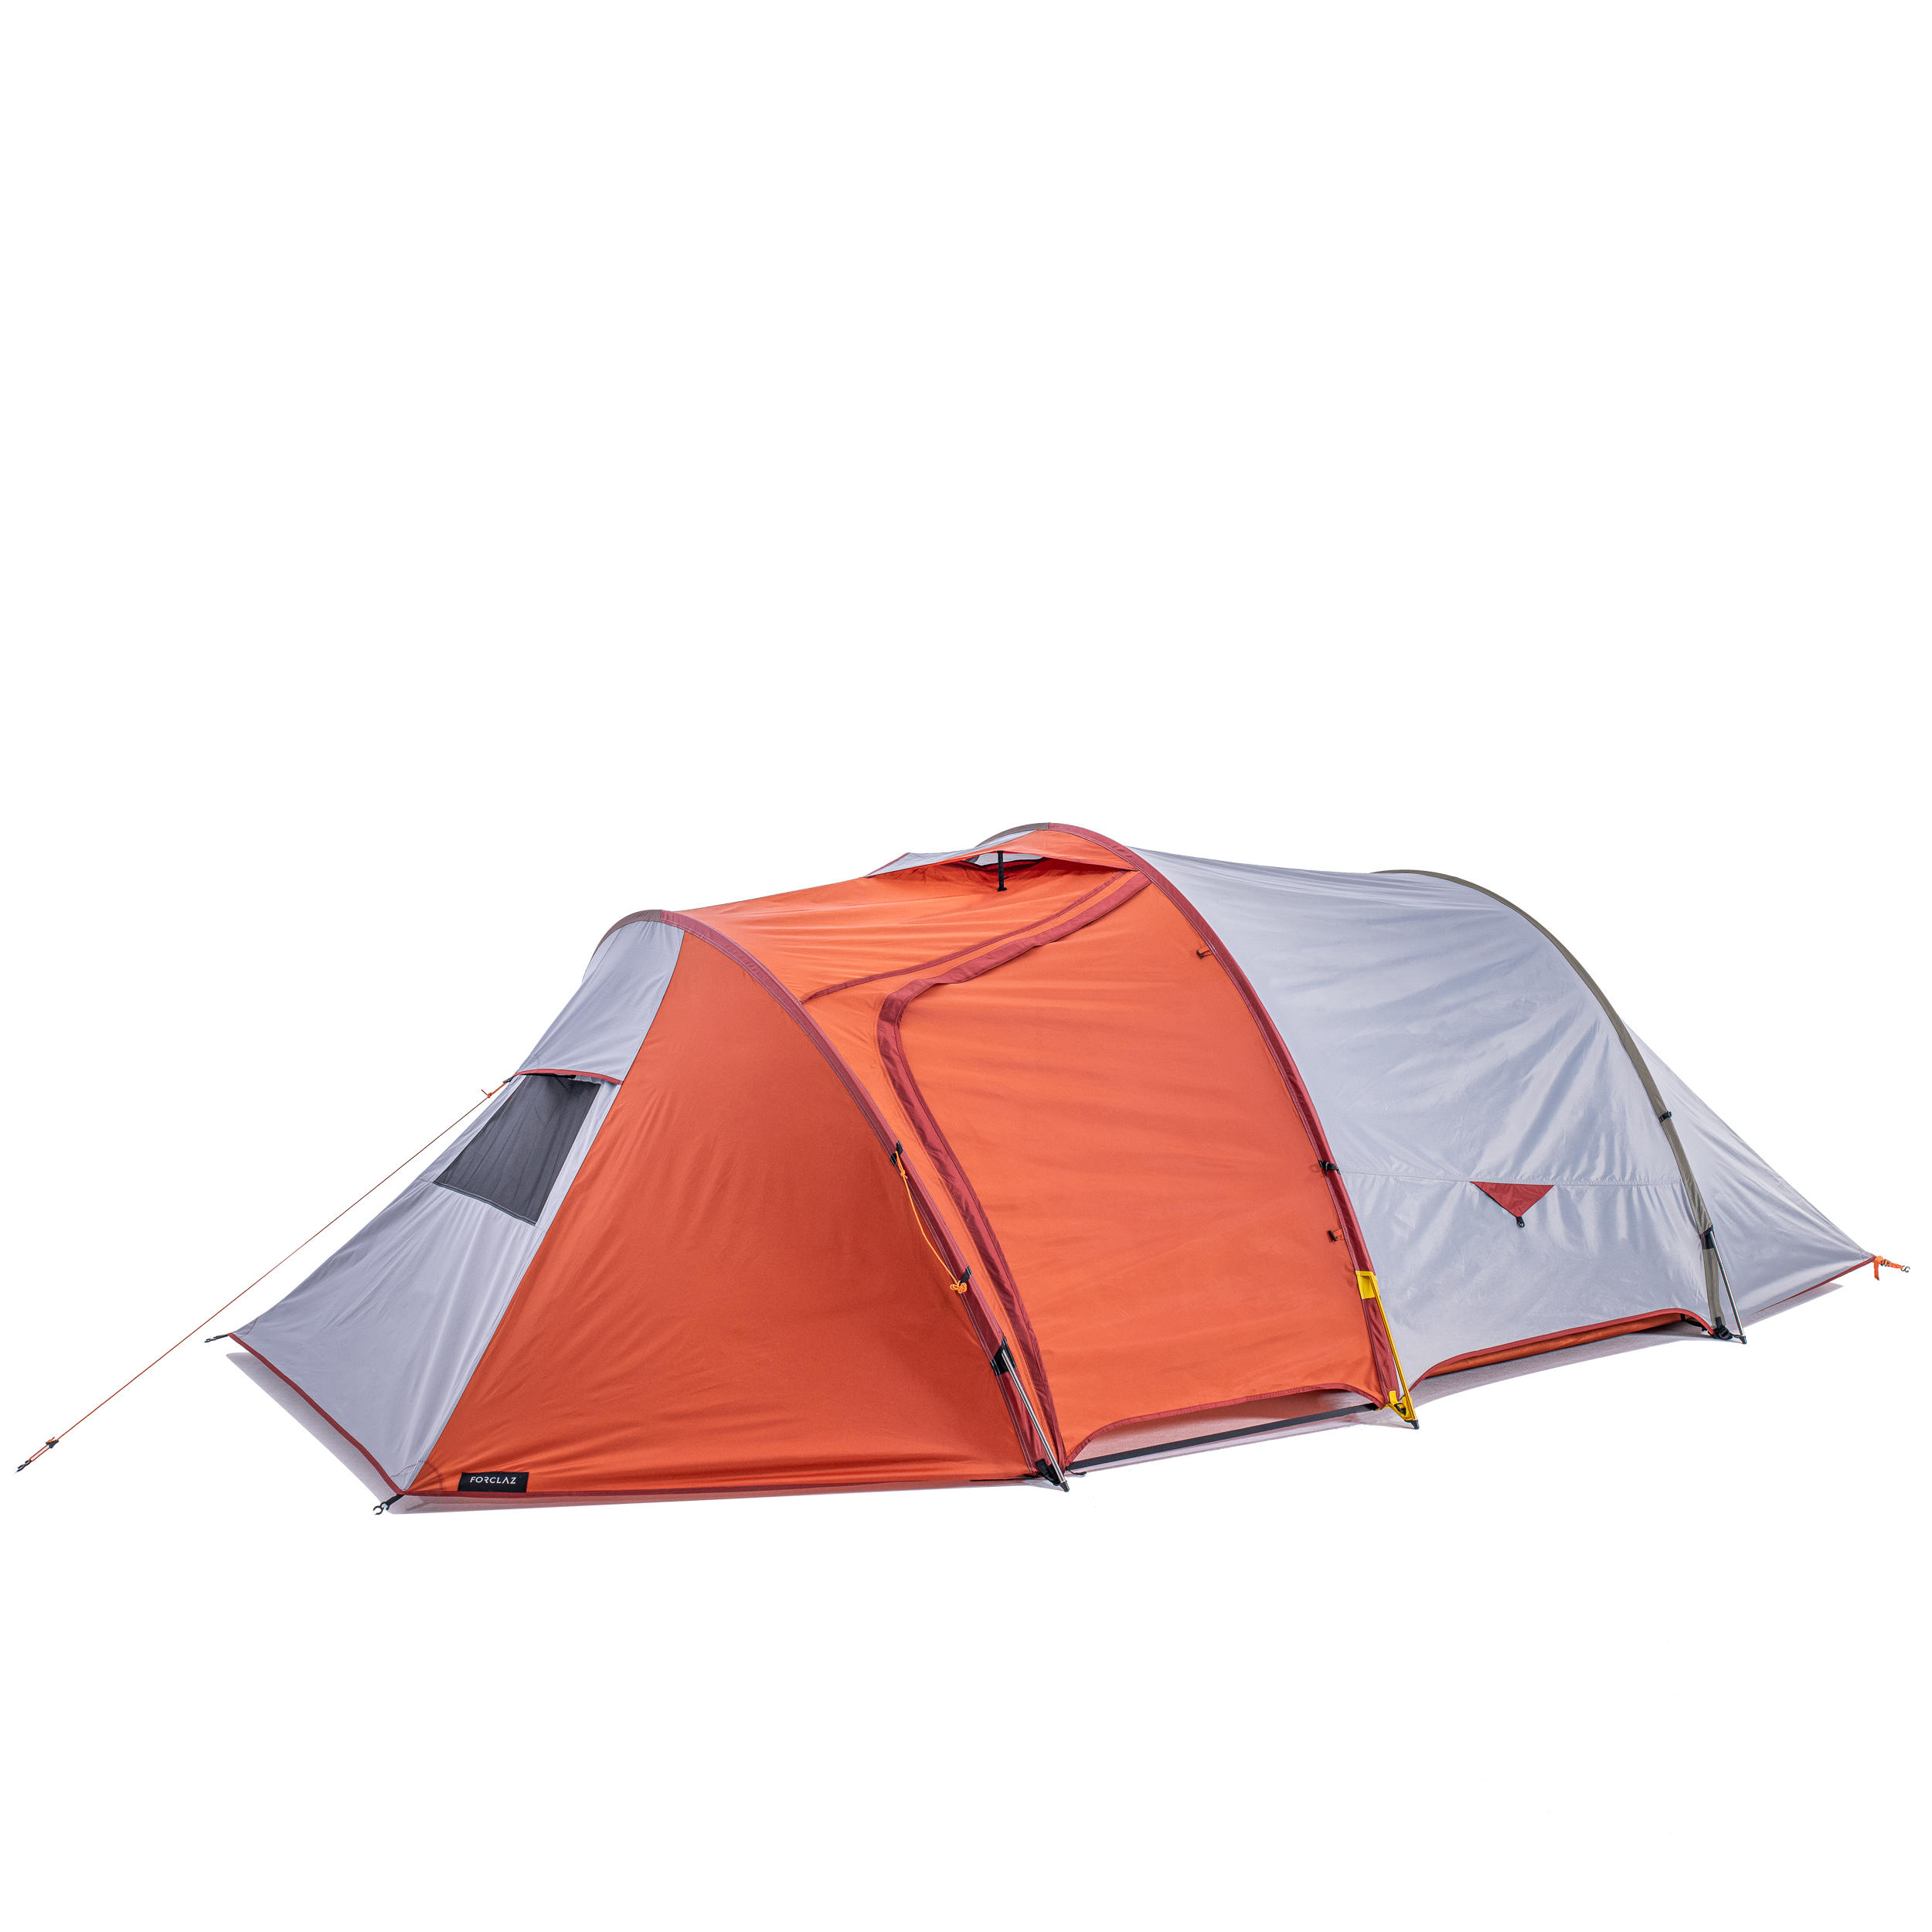 decathlon lightweight tent